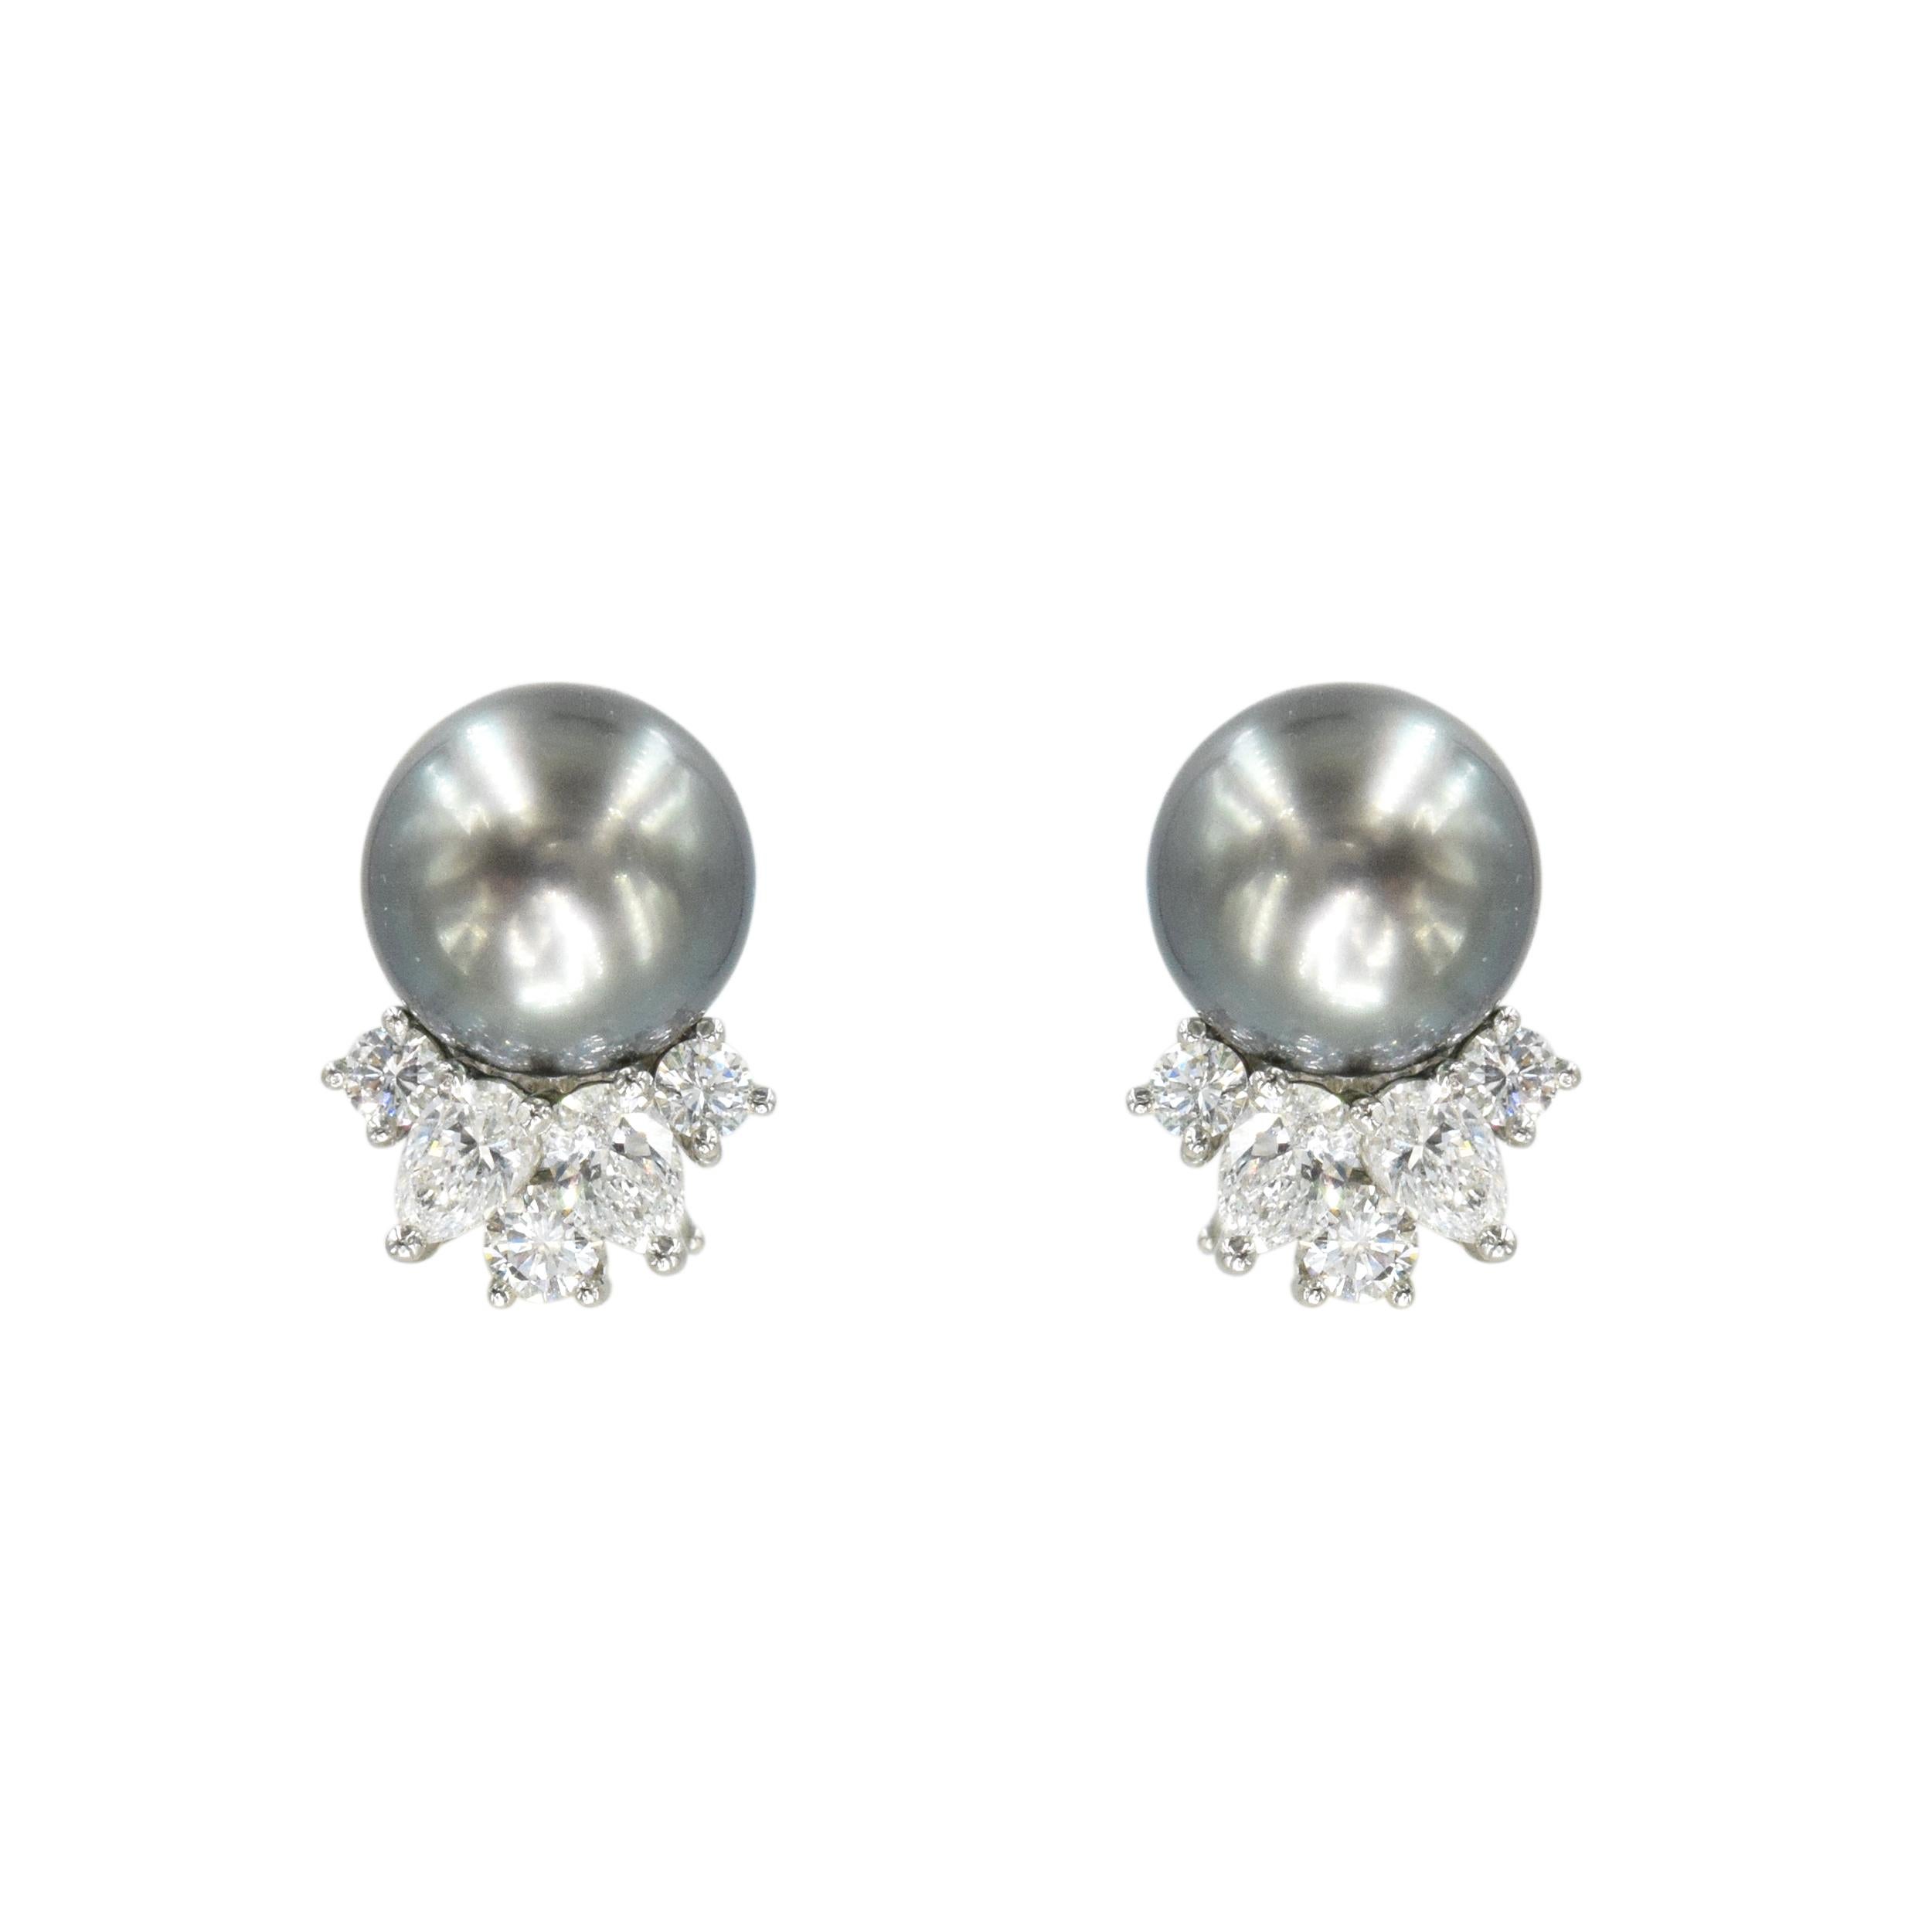 Artist Tiffany & Co. Black Pearl and Diamond Earrings in Platinum